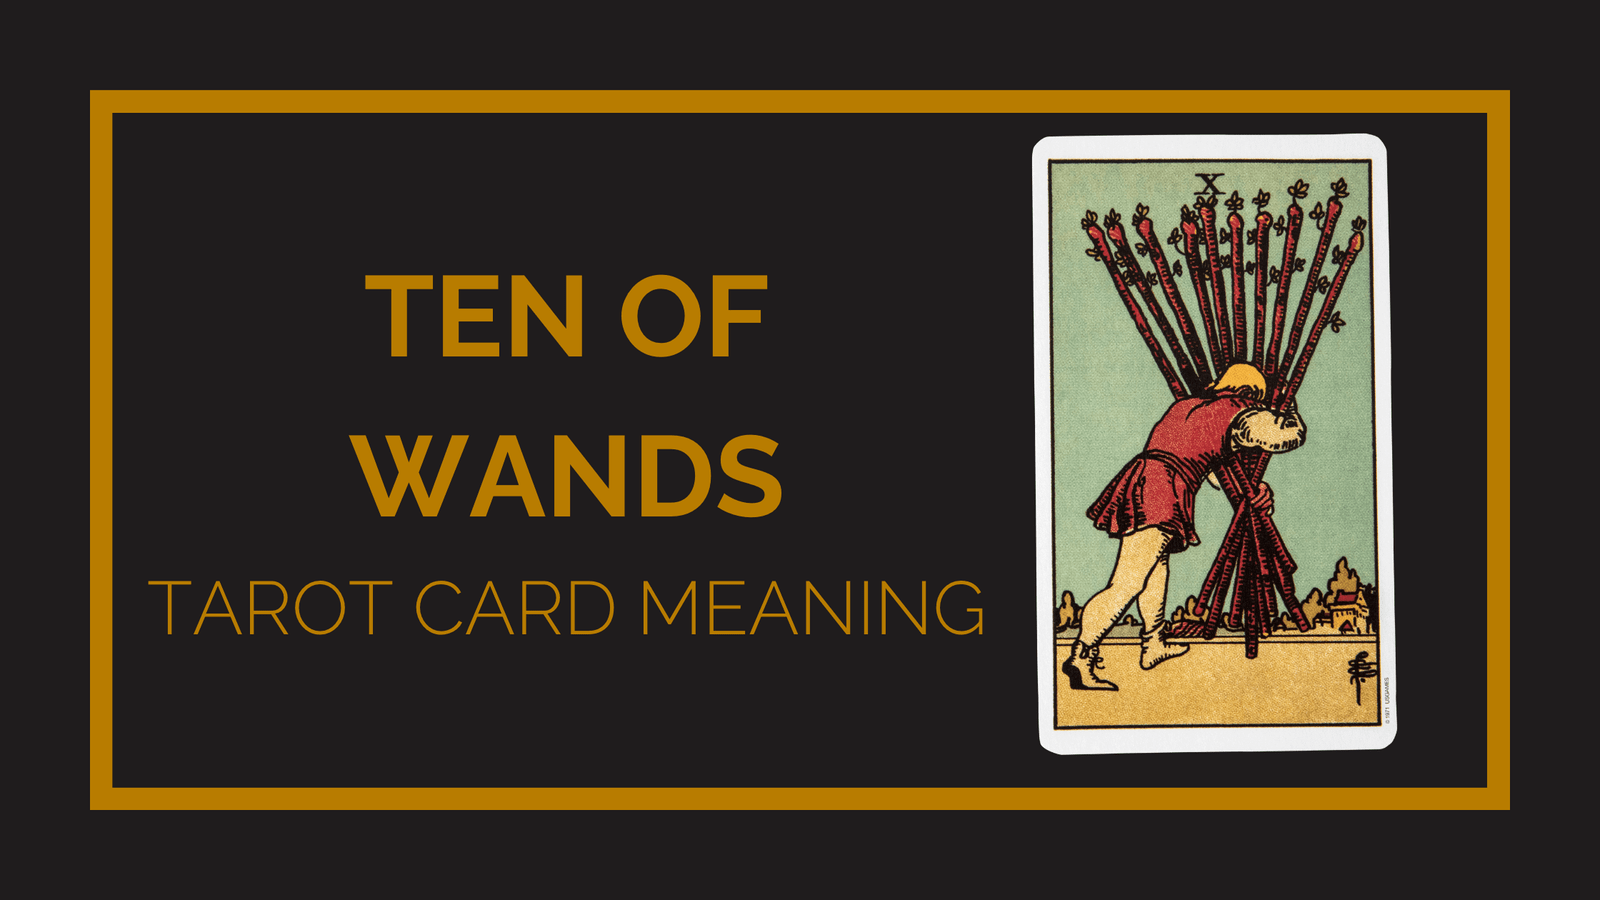 Ten of wands tarot card meaning | tarot with gord